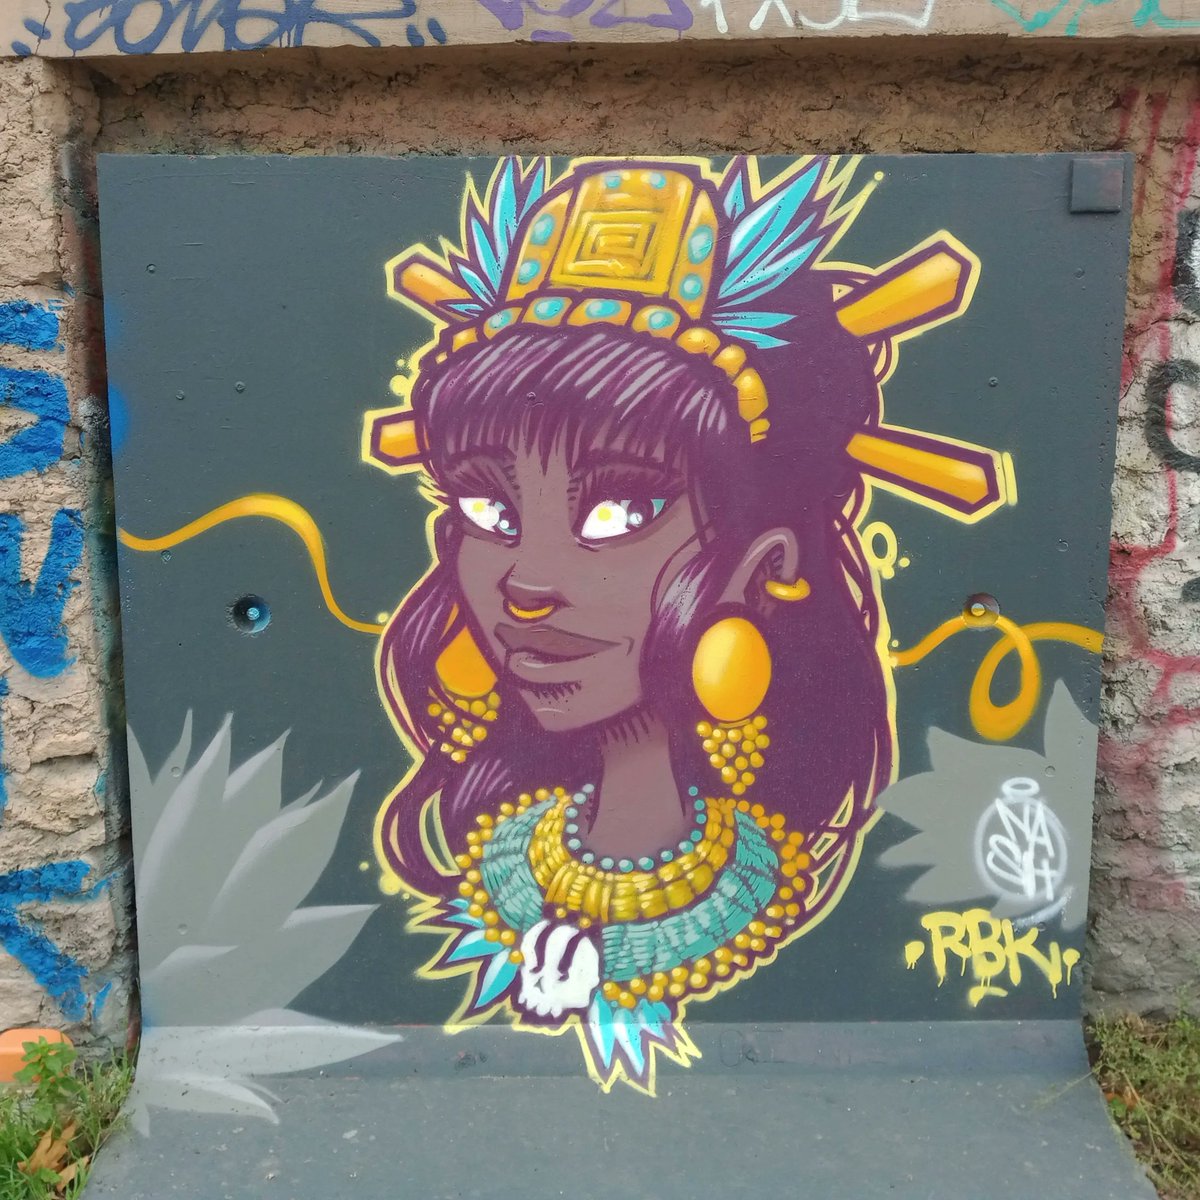 Paris Street Art - Mayan Princess
buff.ly/3OFgRX2 #banksywall rt #banksyart #graffitiartcanvas #spraypaintart #streetartpainting #streetartoncanvas
#streetartcanvas #graffitiwallart #graffitiart #funkywallart #popcultureart #marvelart #banksycanvas